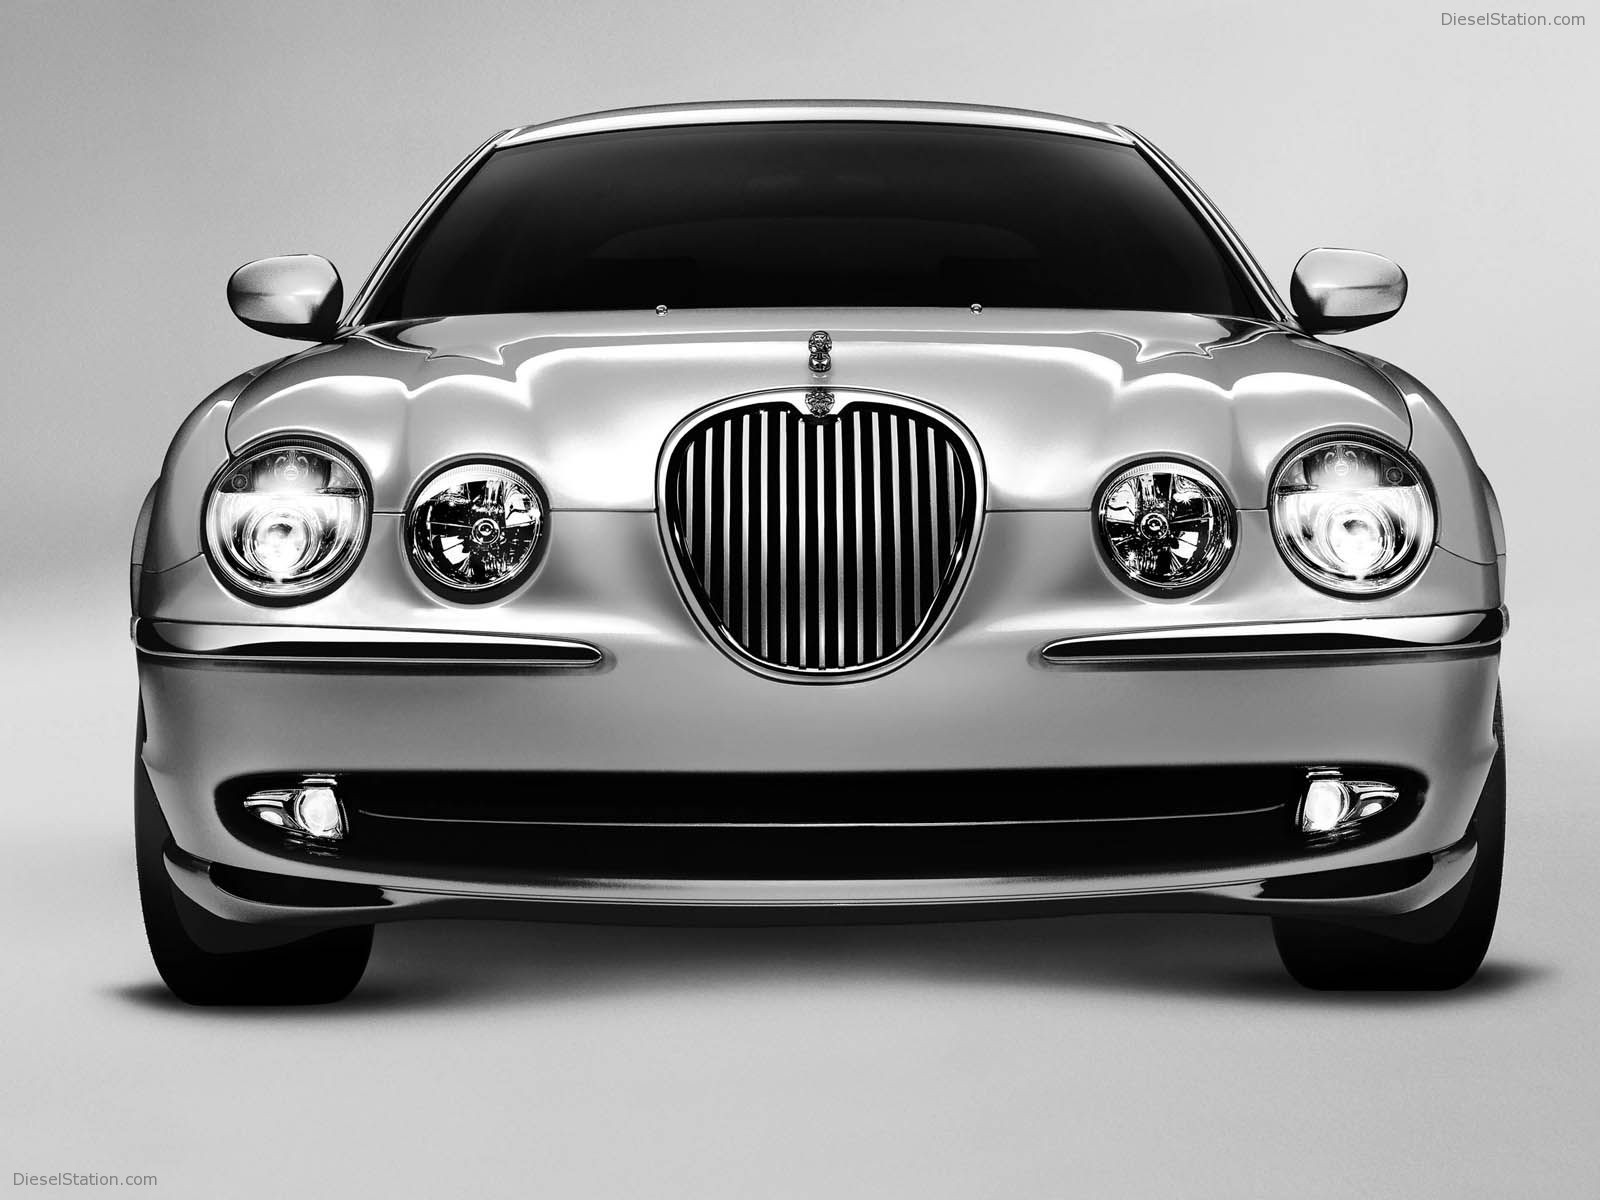 Carsgear Jaguar S Type Diesel Luxury Car Wallpaper